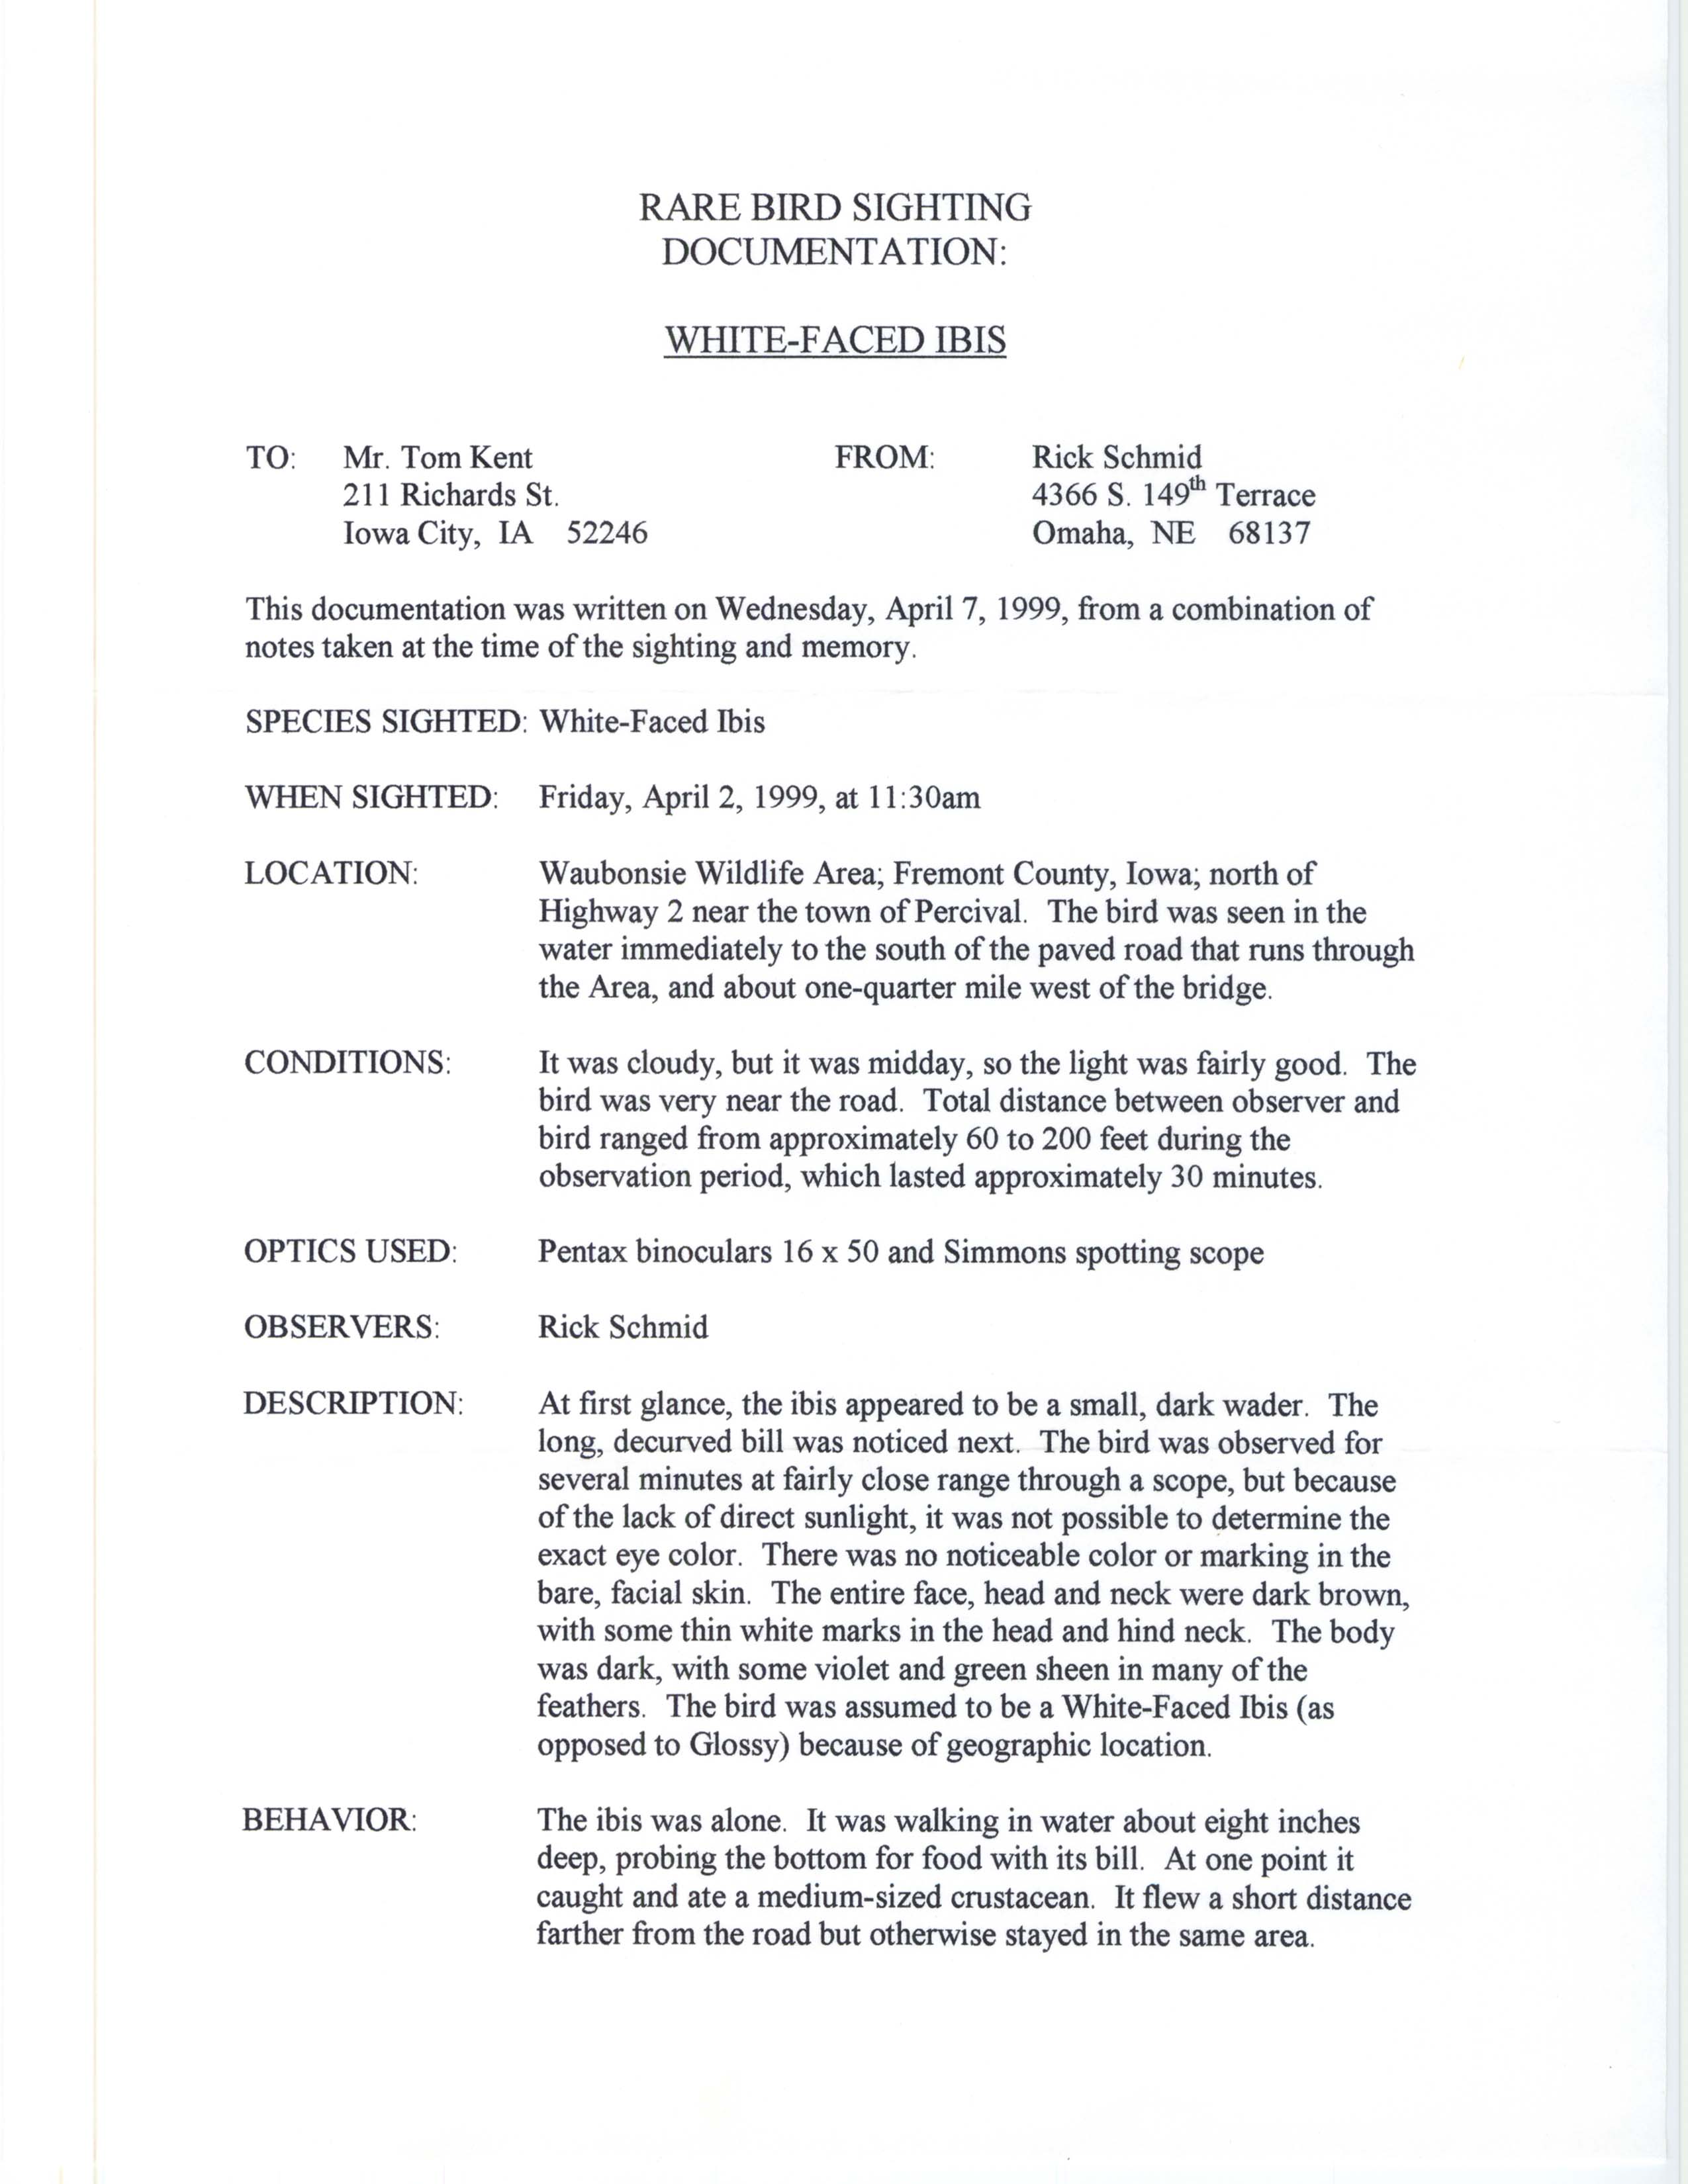 Rare bird documentation form for White-faced Ibis at Waubonsie Wildlife Area, 1999